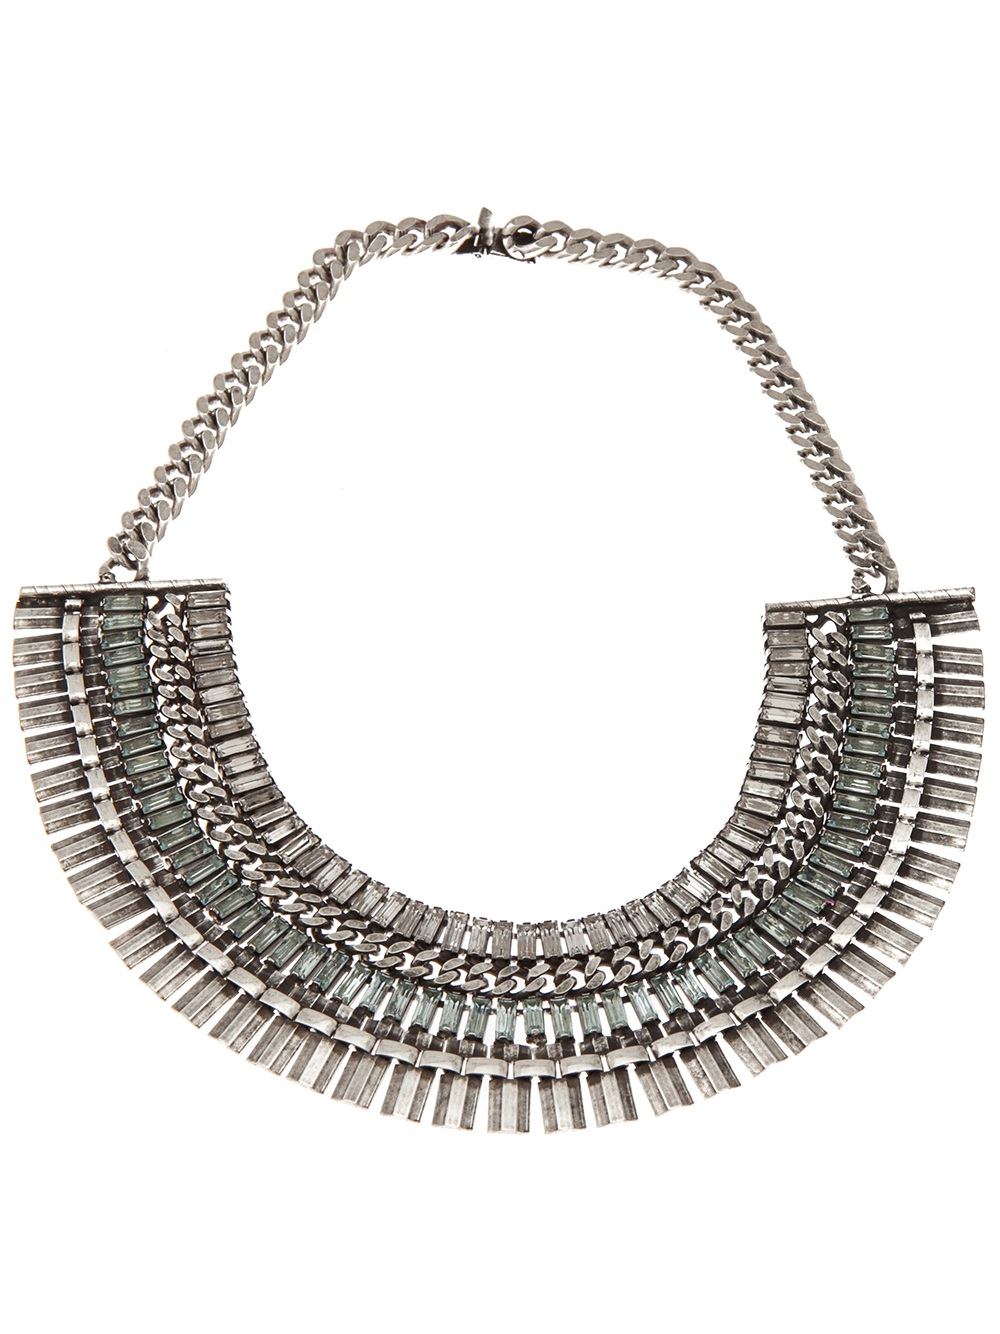 Janis savitt Silvertone Necklace in Silver | Lyst